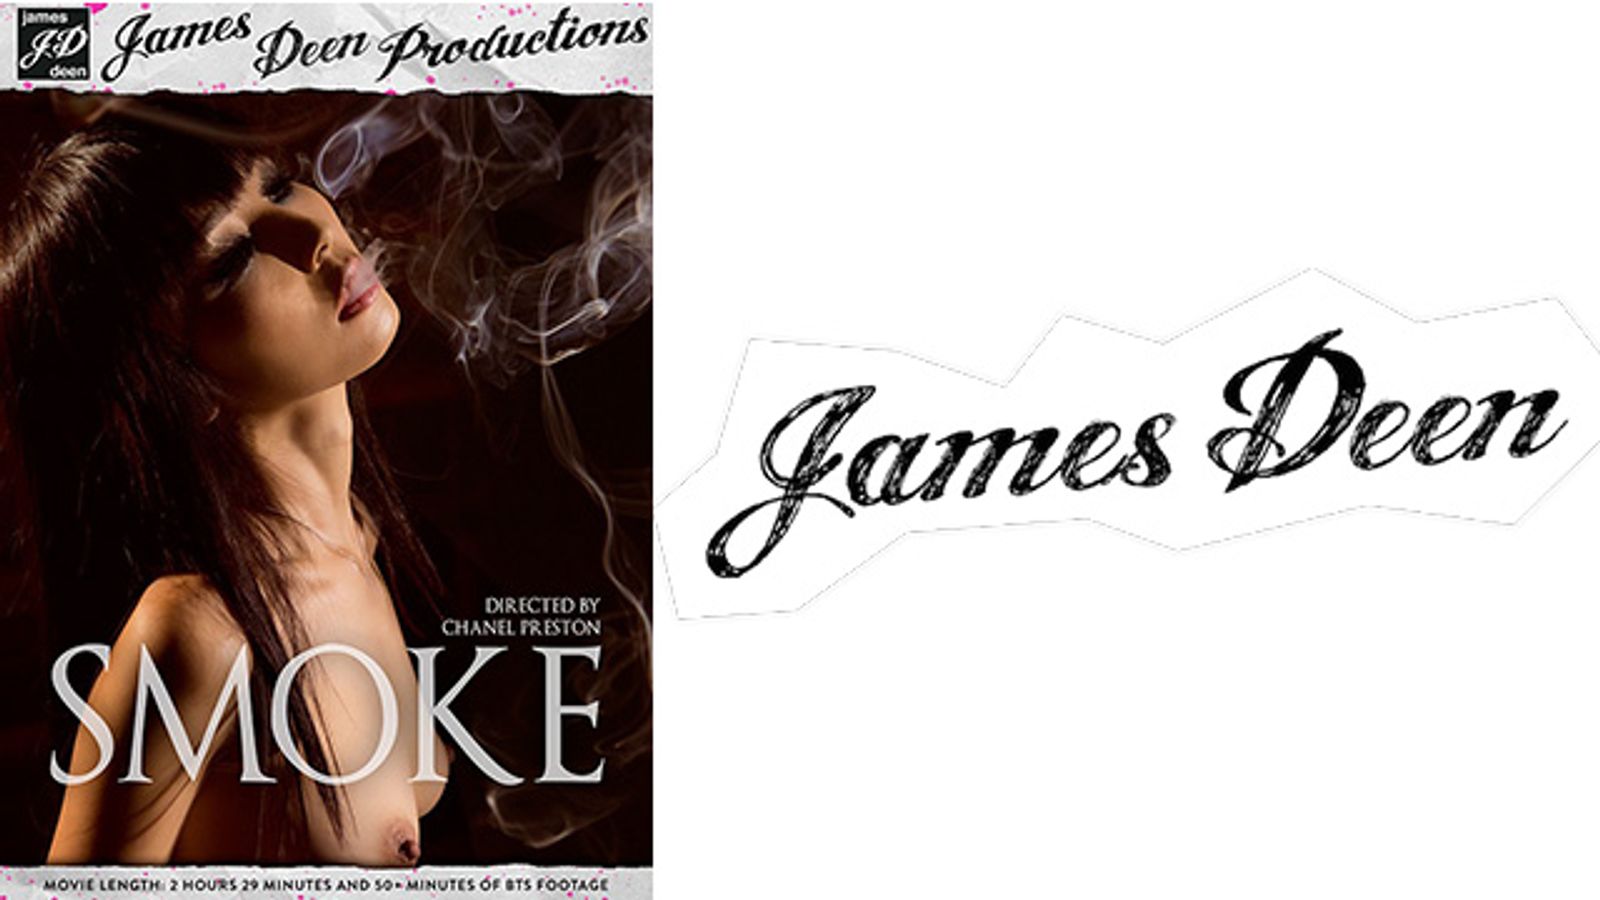 James Deen Productions Ships Chanel Preston's ‘Smoke’